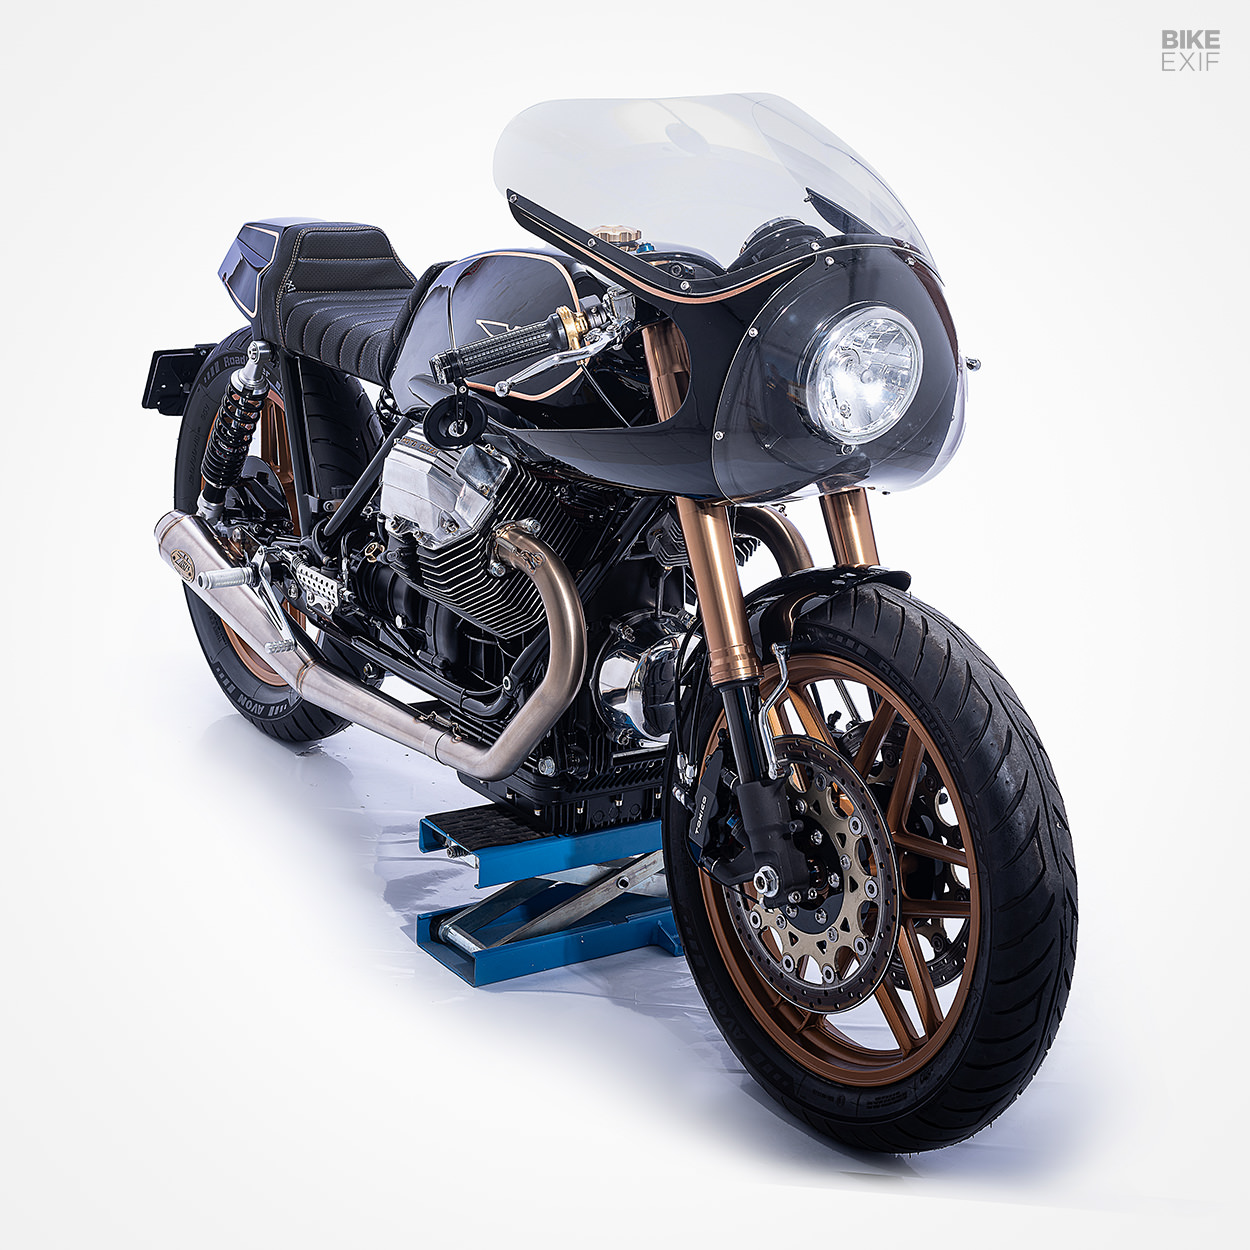 Moto Guzzi Mille Gt Cafe Racer由Rustry扳手摩托車